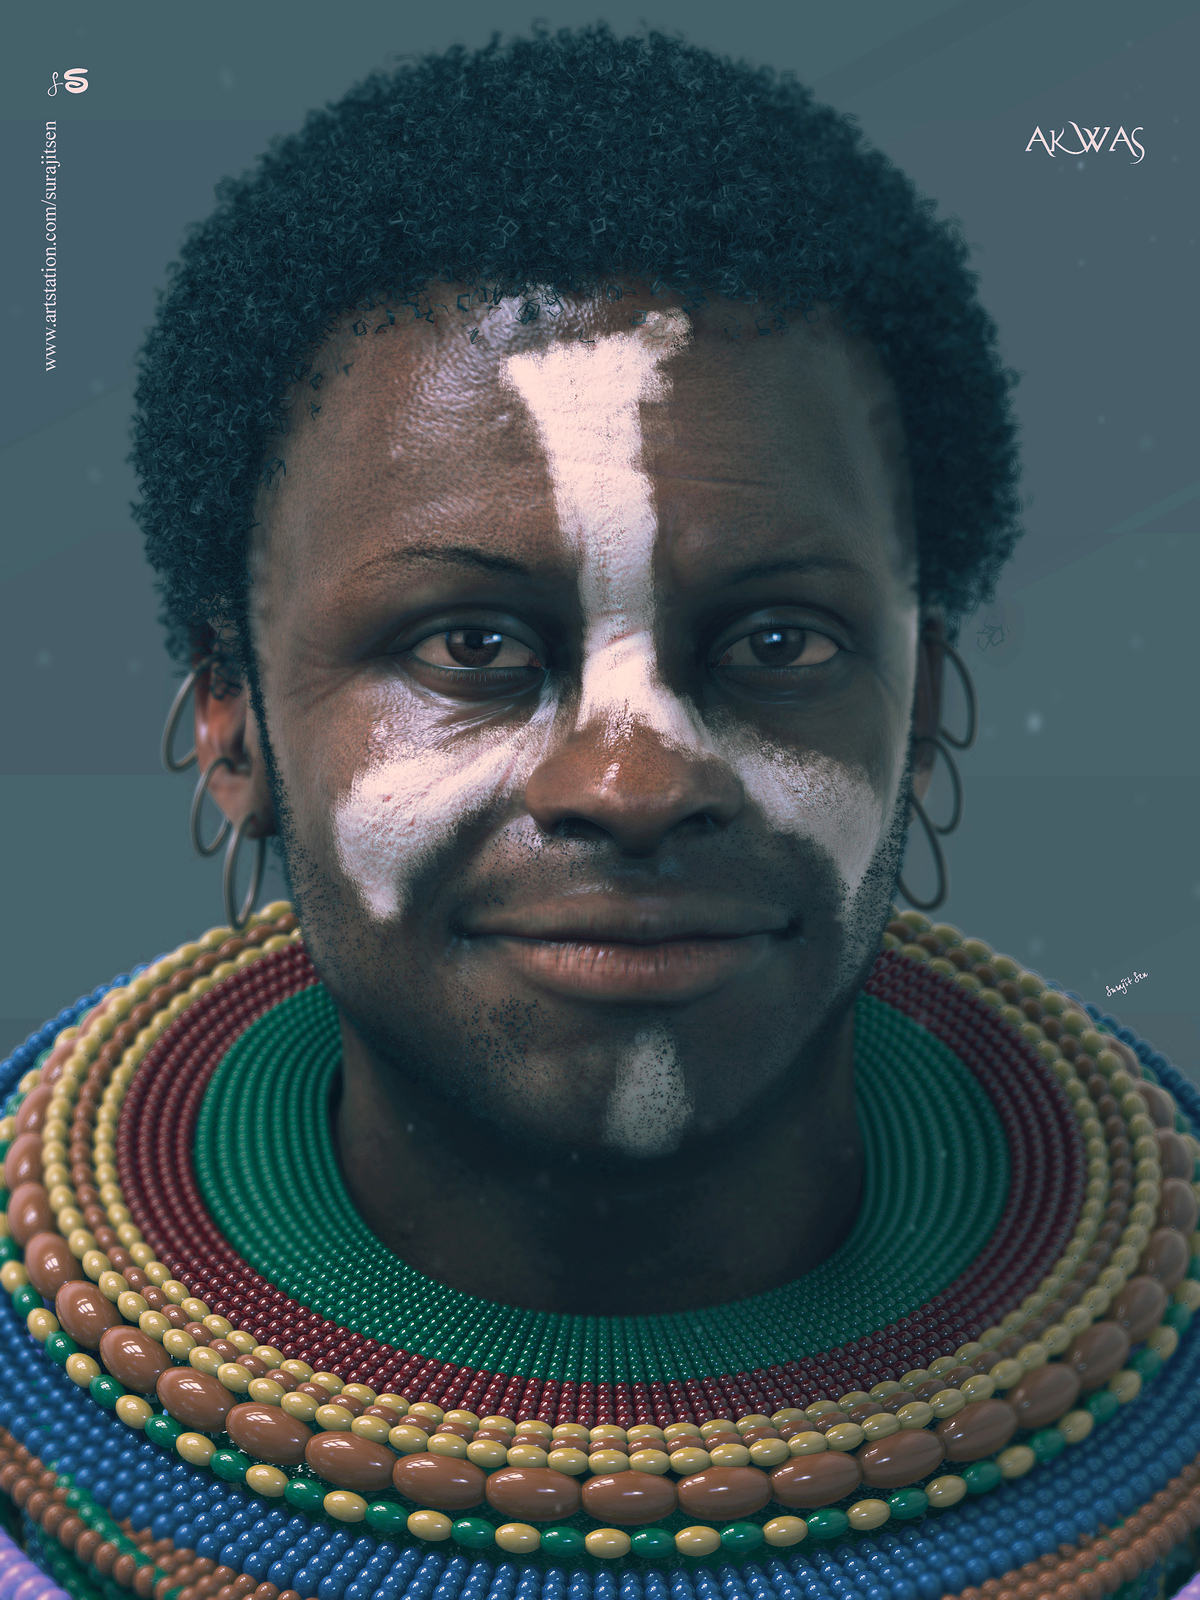 AKWAS_African_Tribal_CG_Character_SurajitSen_Nov2019